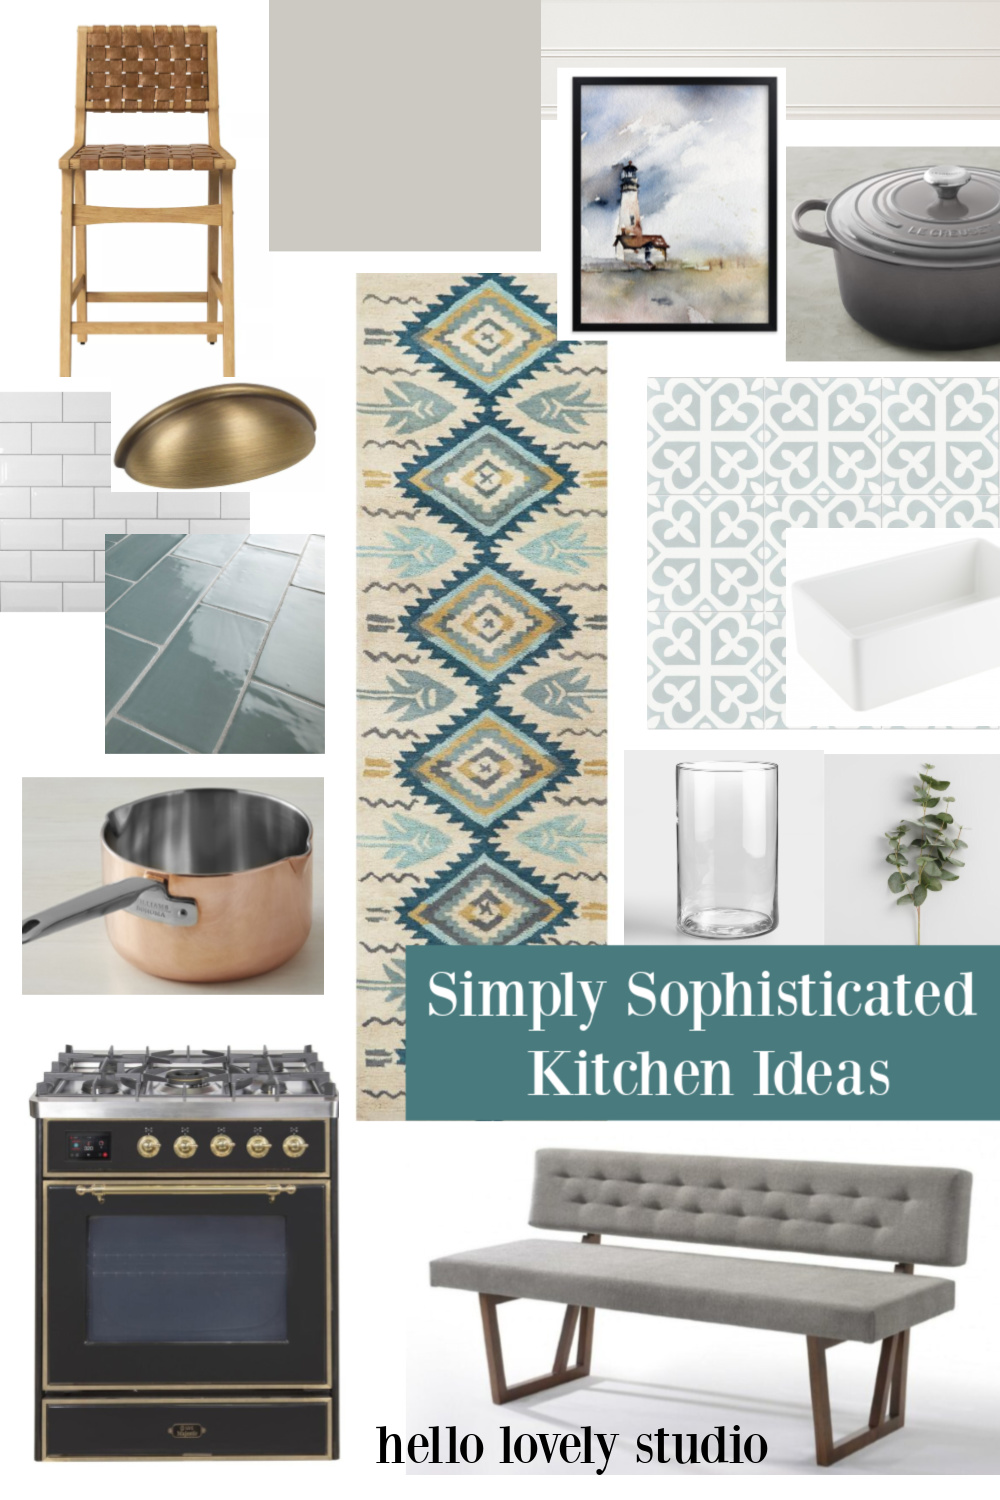 Simply sophisticated kitchen ideas for decor and design - Hello Lovely Studio. #kitchendesign #interiordesign #decoratingideas #luxuriouskitchen #sophisticateddecor #classicdecor